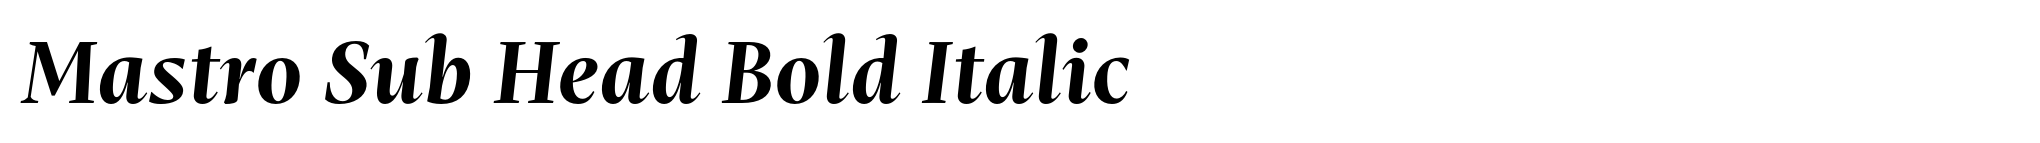 Mastro Sub Head Bold Italic image